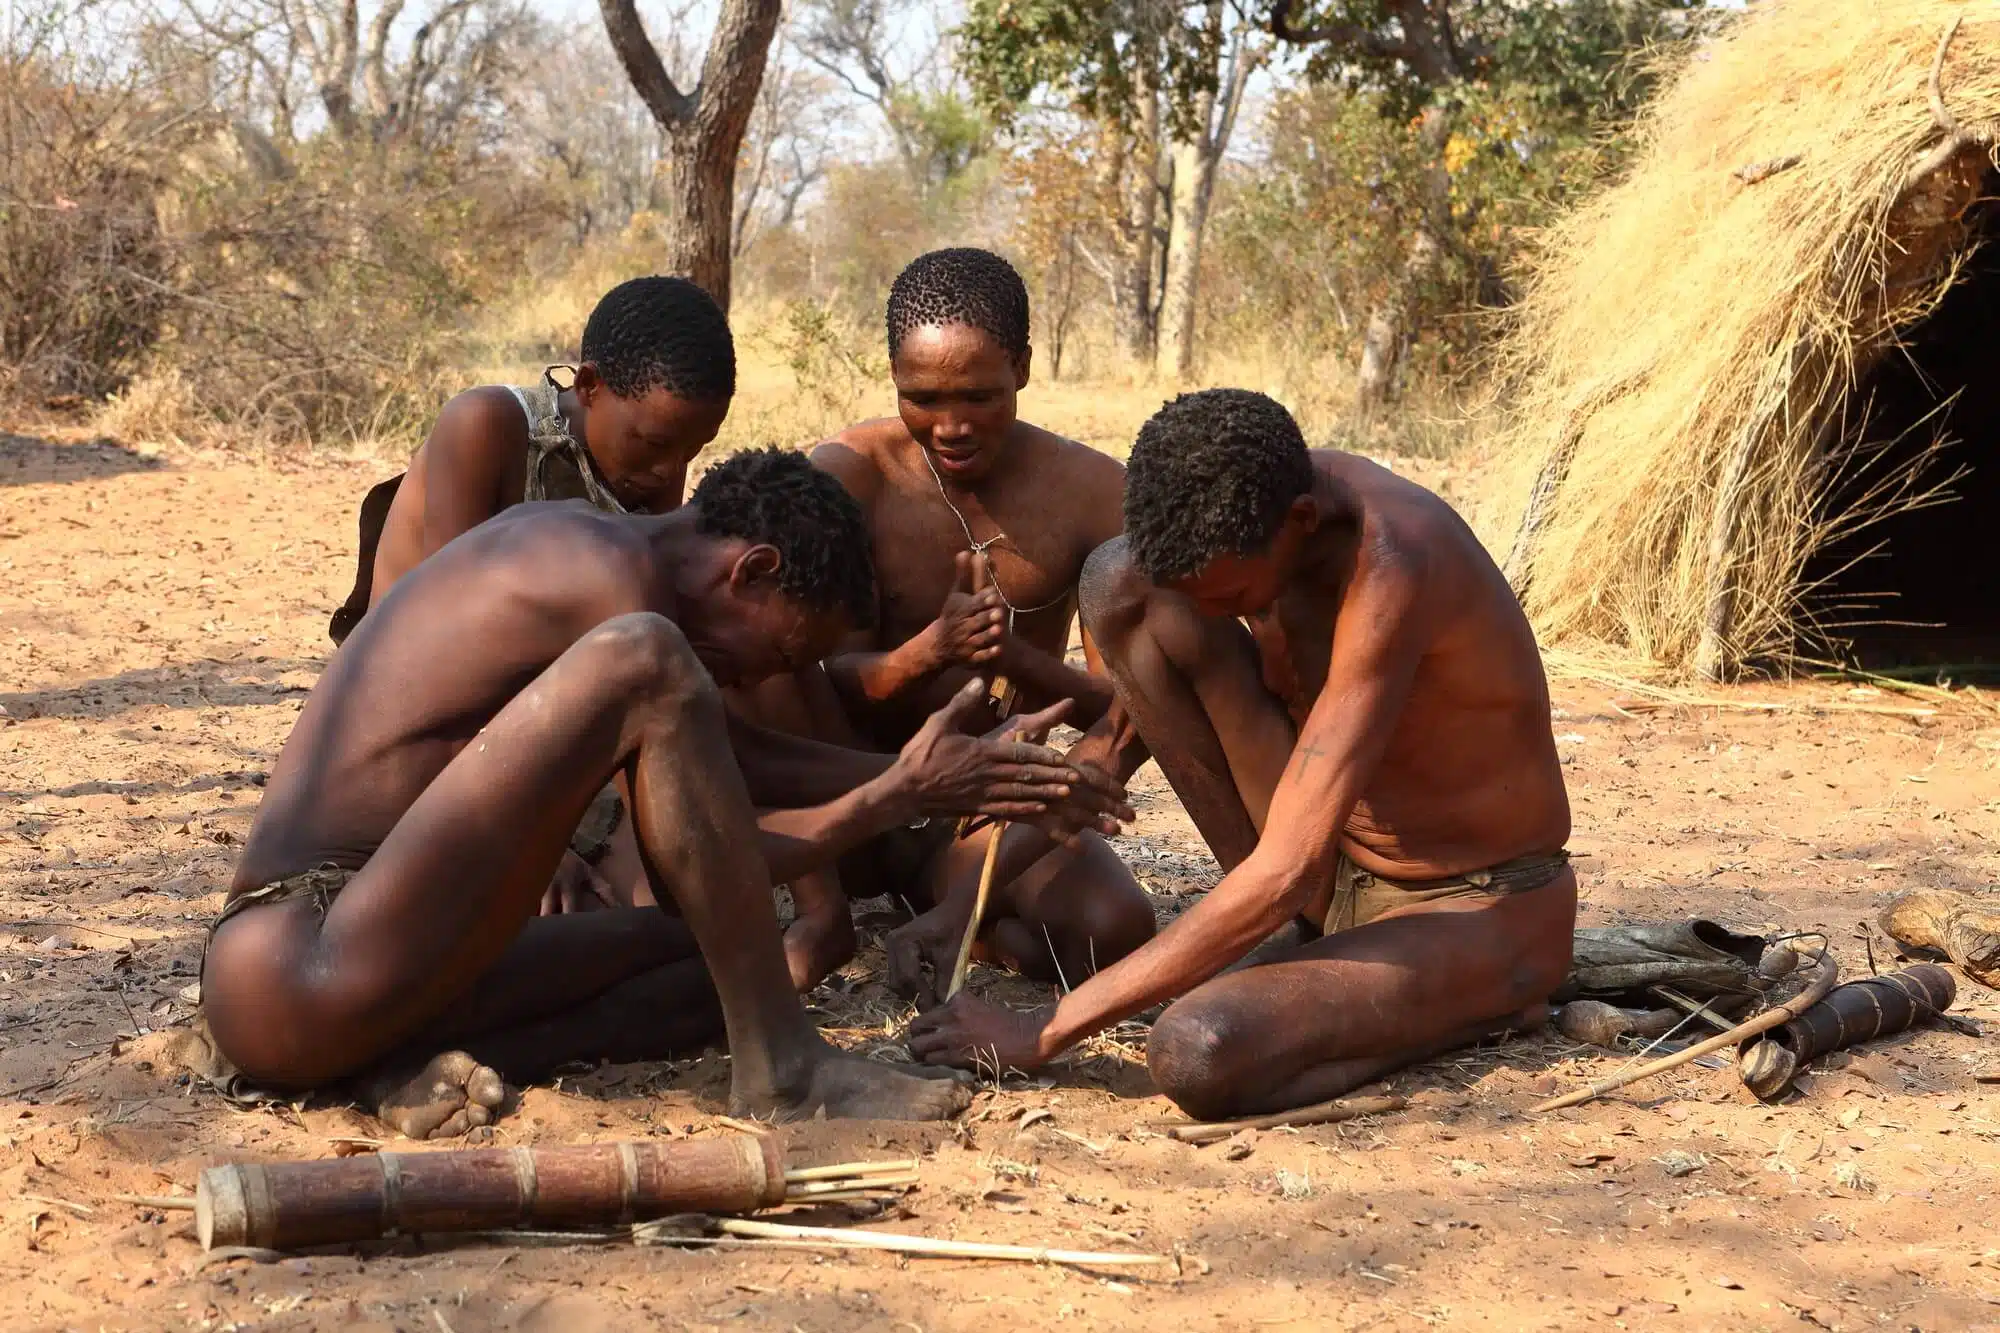 Bushmen in Africa light a fire together. Image: depositphotos.com